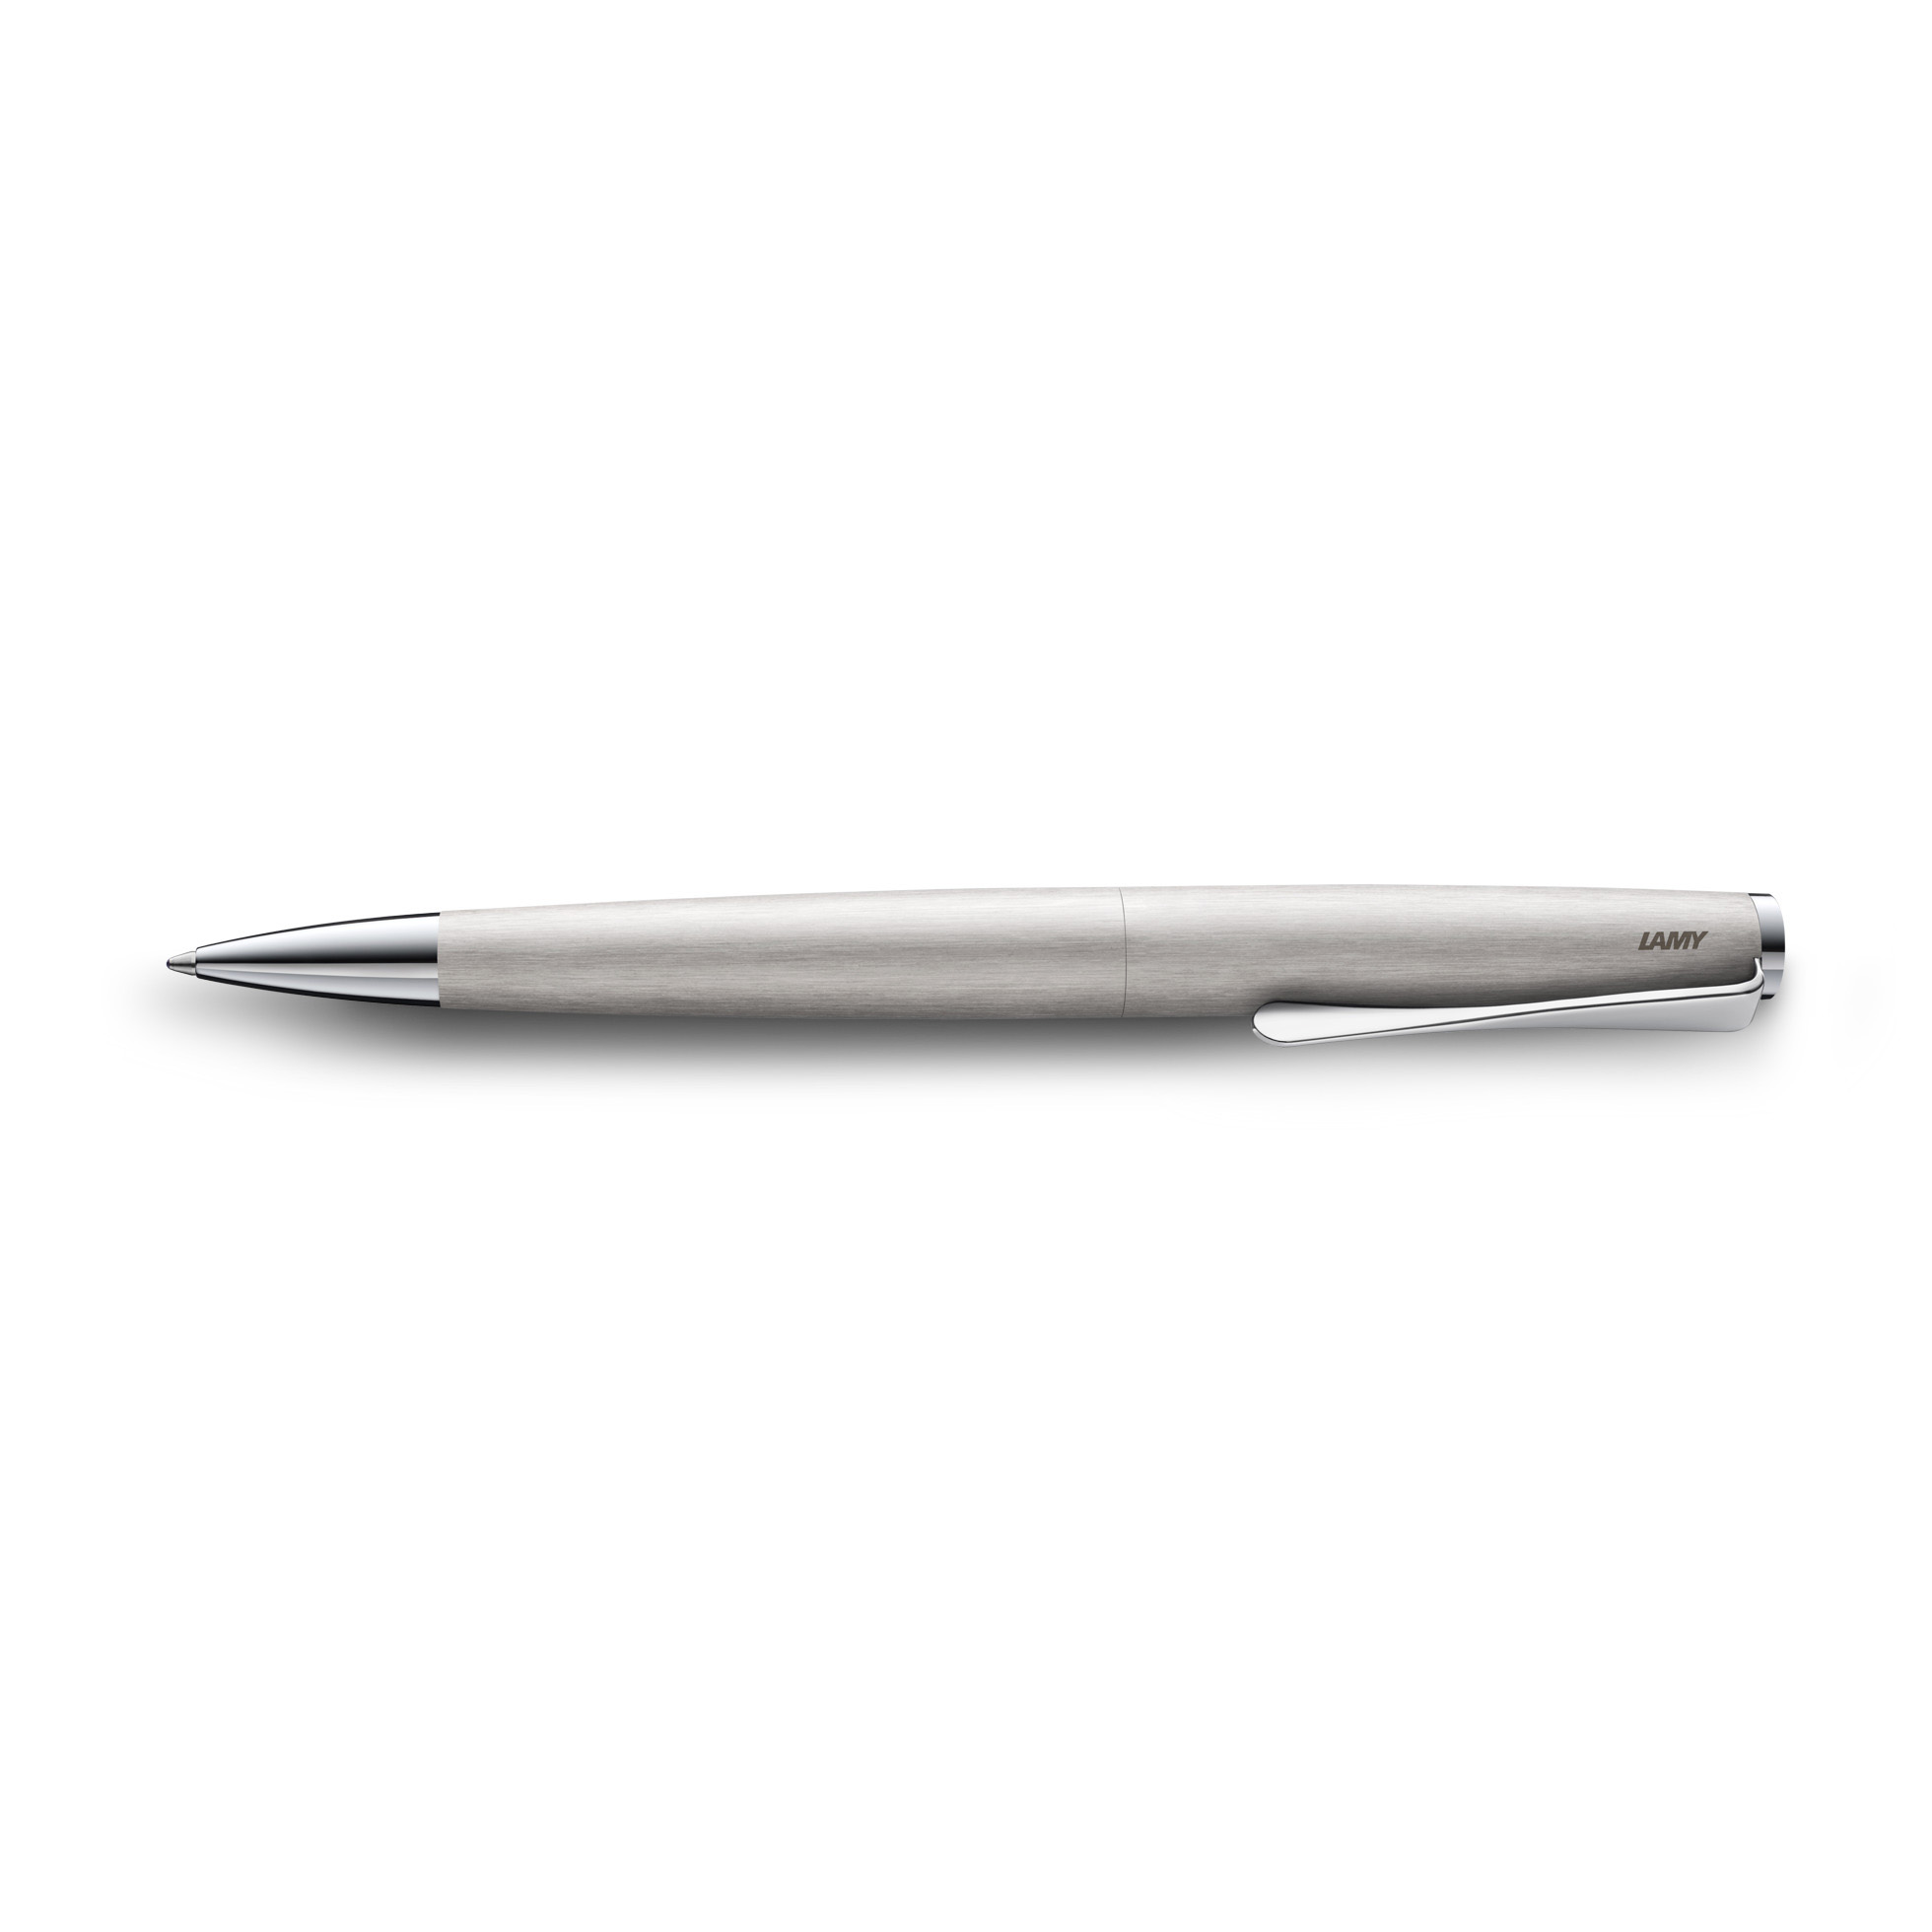 LAMY studio brushed — Ballpoint pen